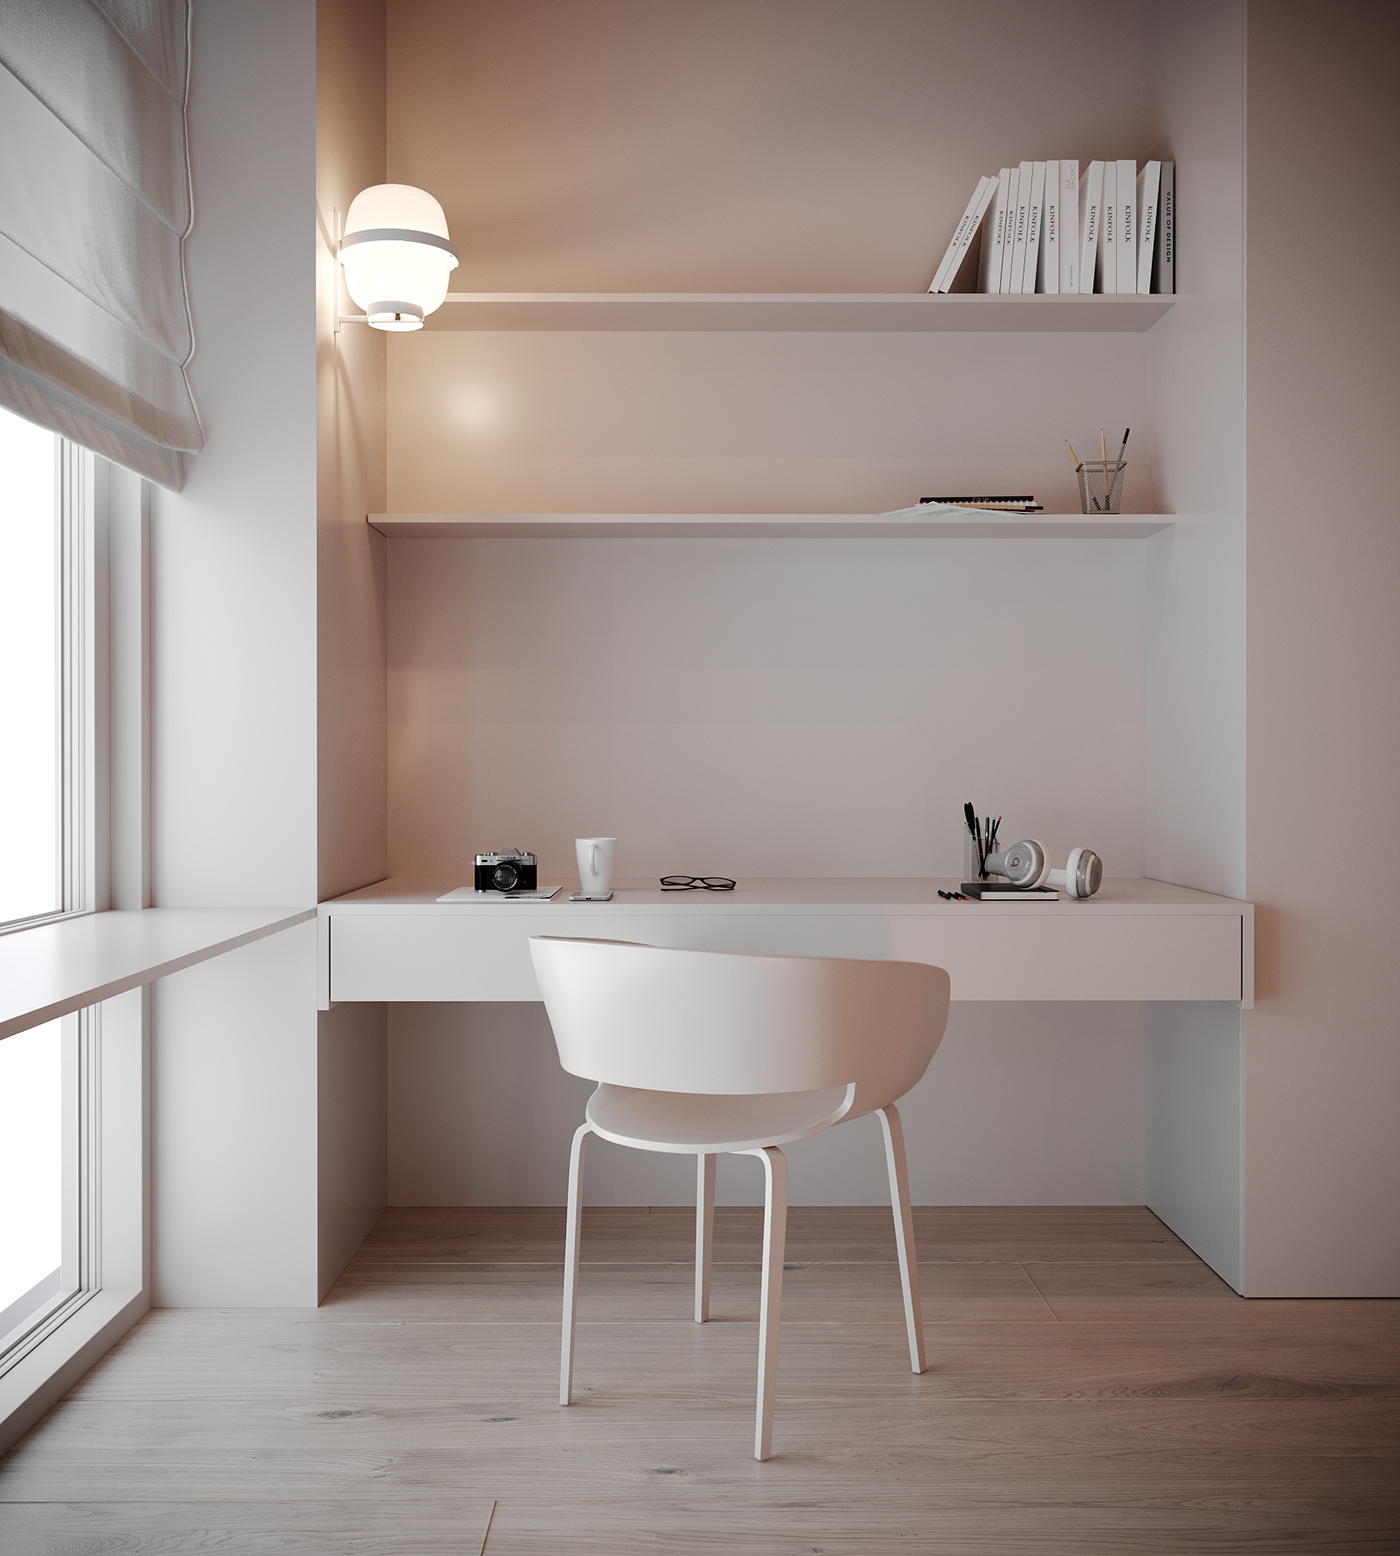 design designinterior interiordesign homedesign Interior HDm2 homedesignkiev livingroomdesign bedroomdesign bathroomdesign